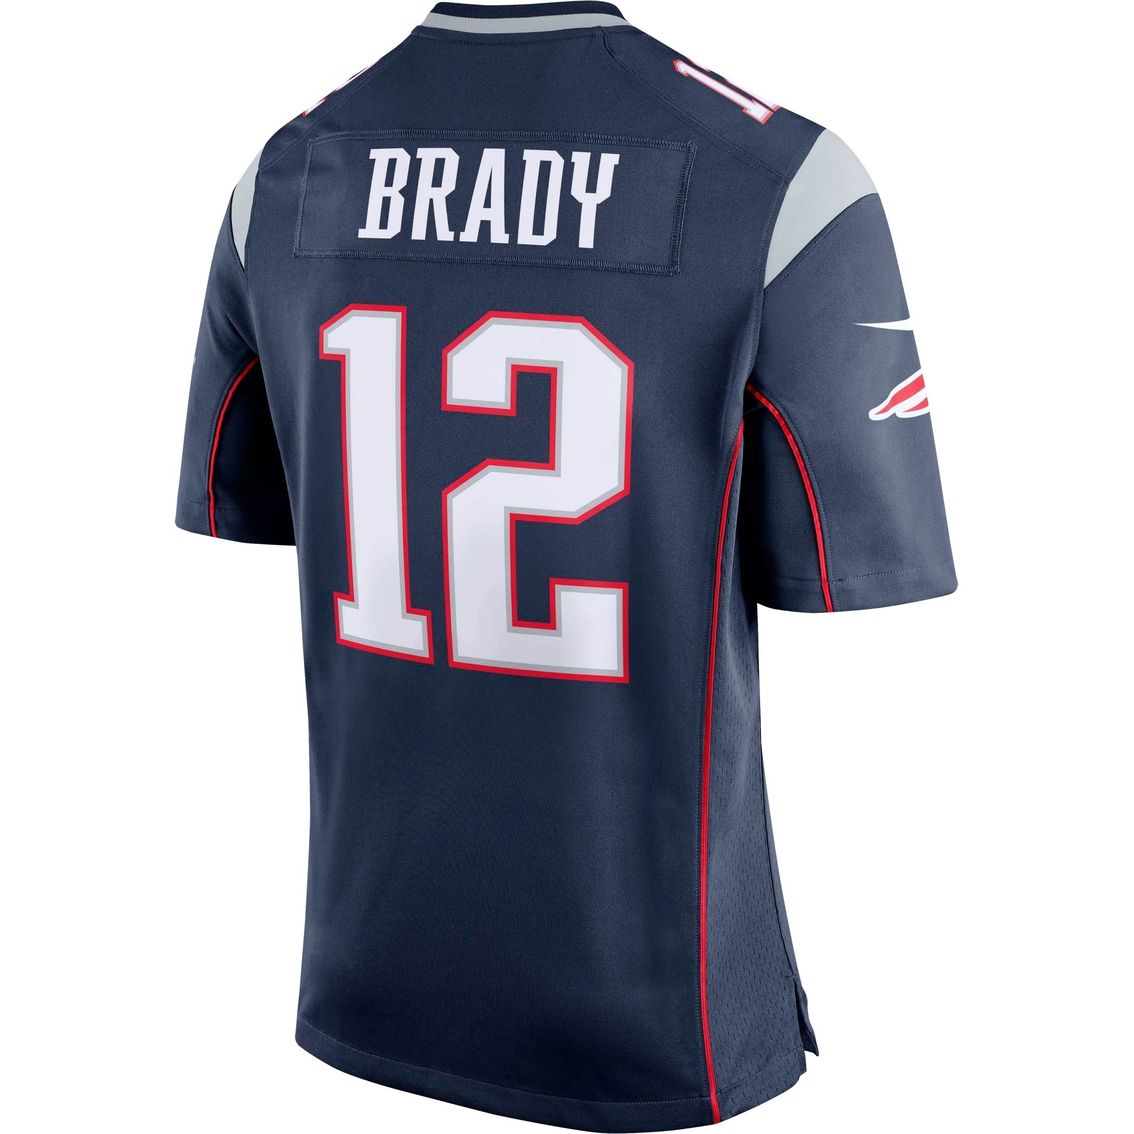 Nike NFL New England Patriots Brady Game Team Jersey - Image 2 of 2